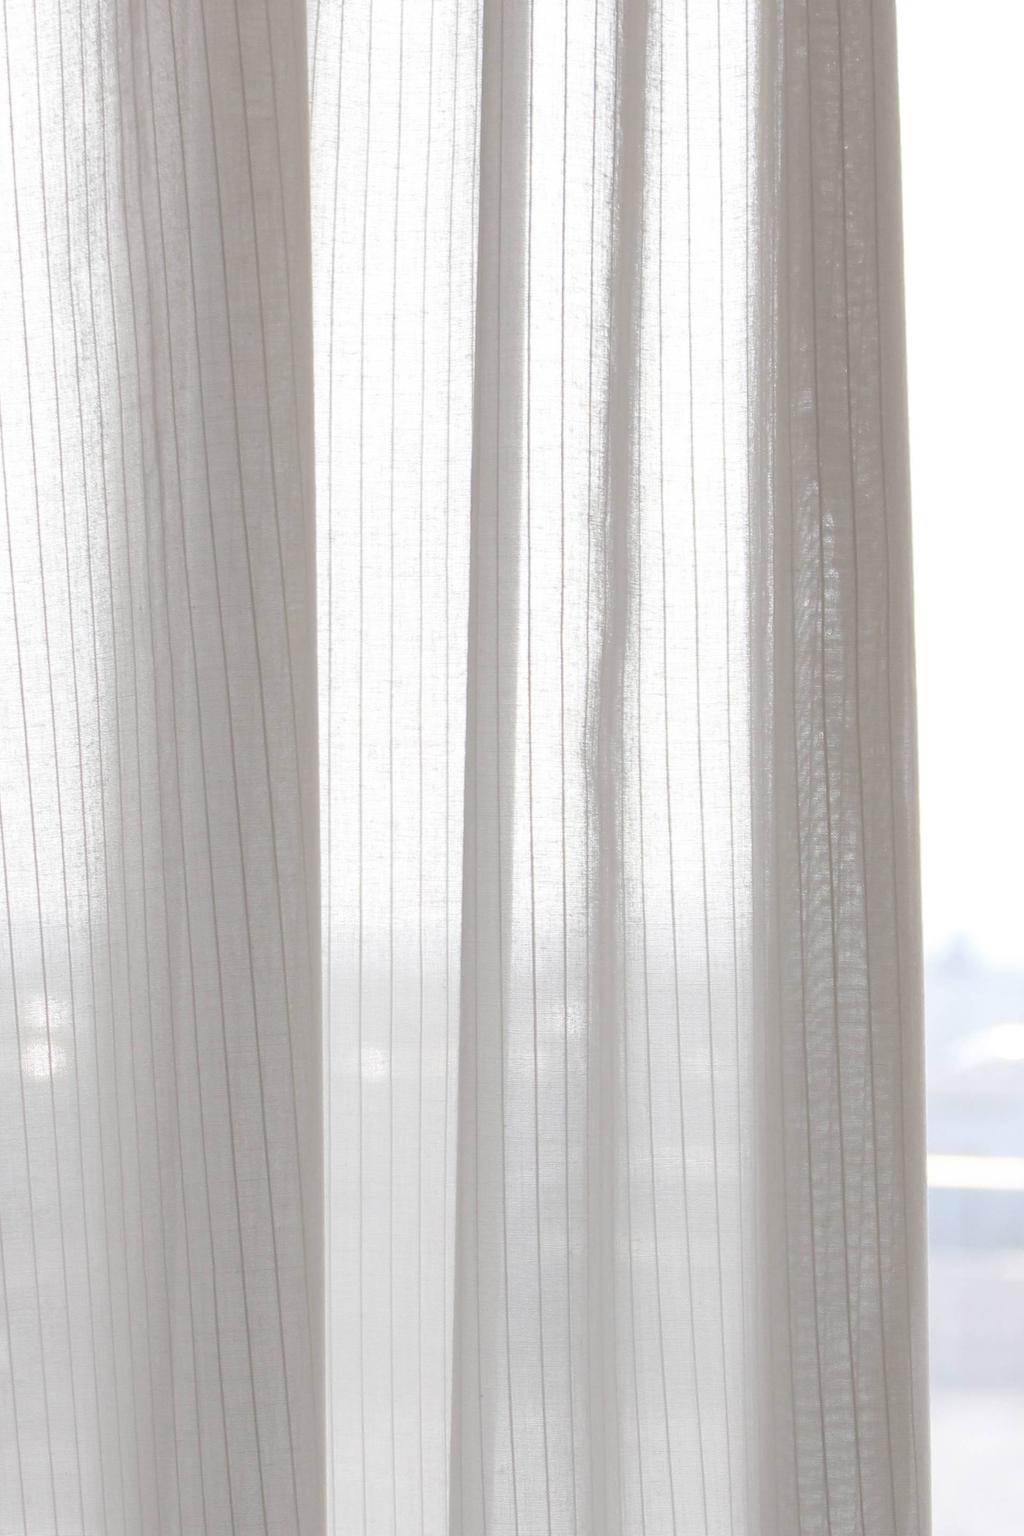 Use: Semi-transparent curtain fabric